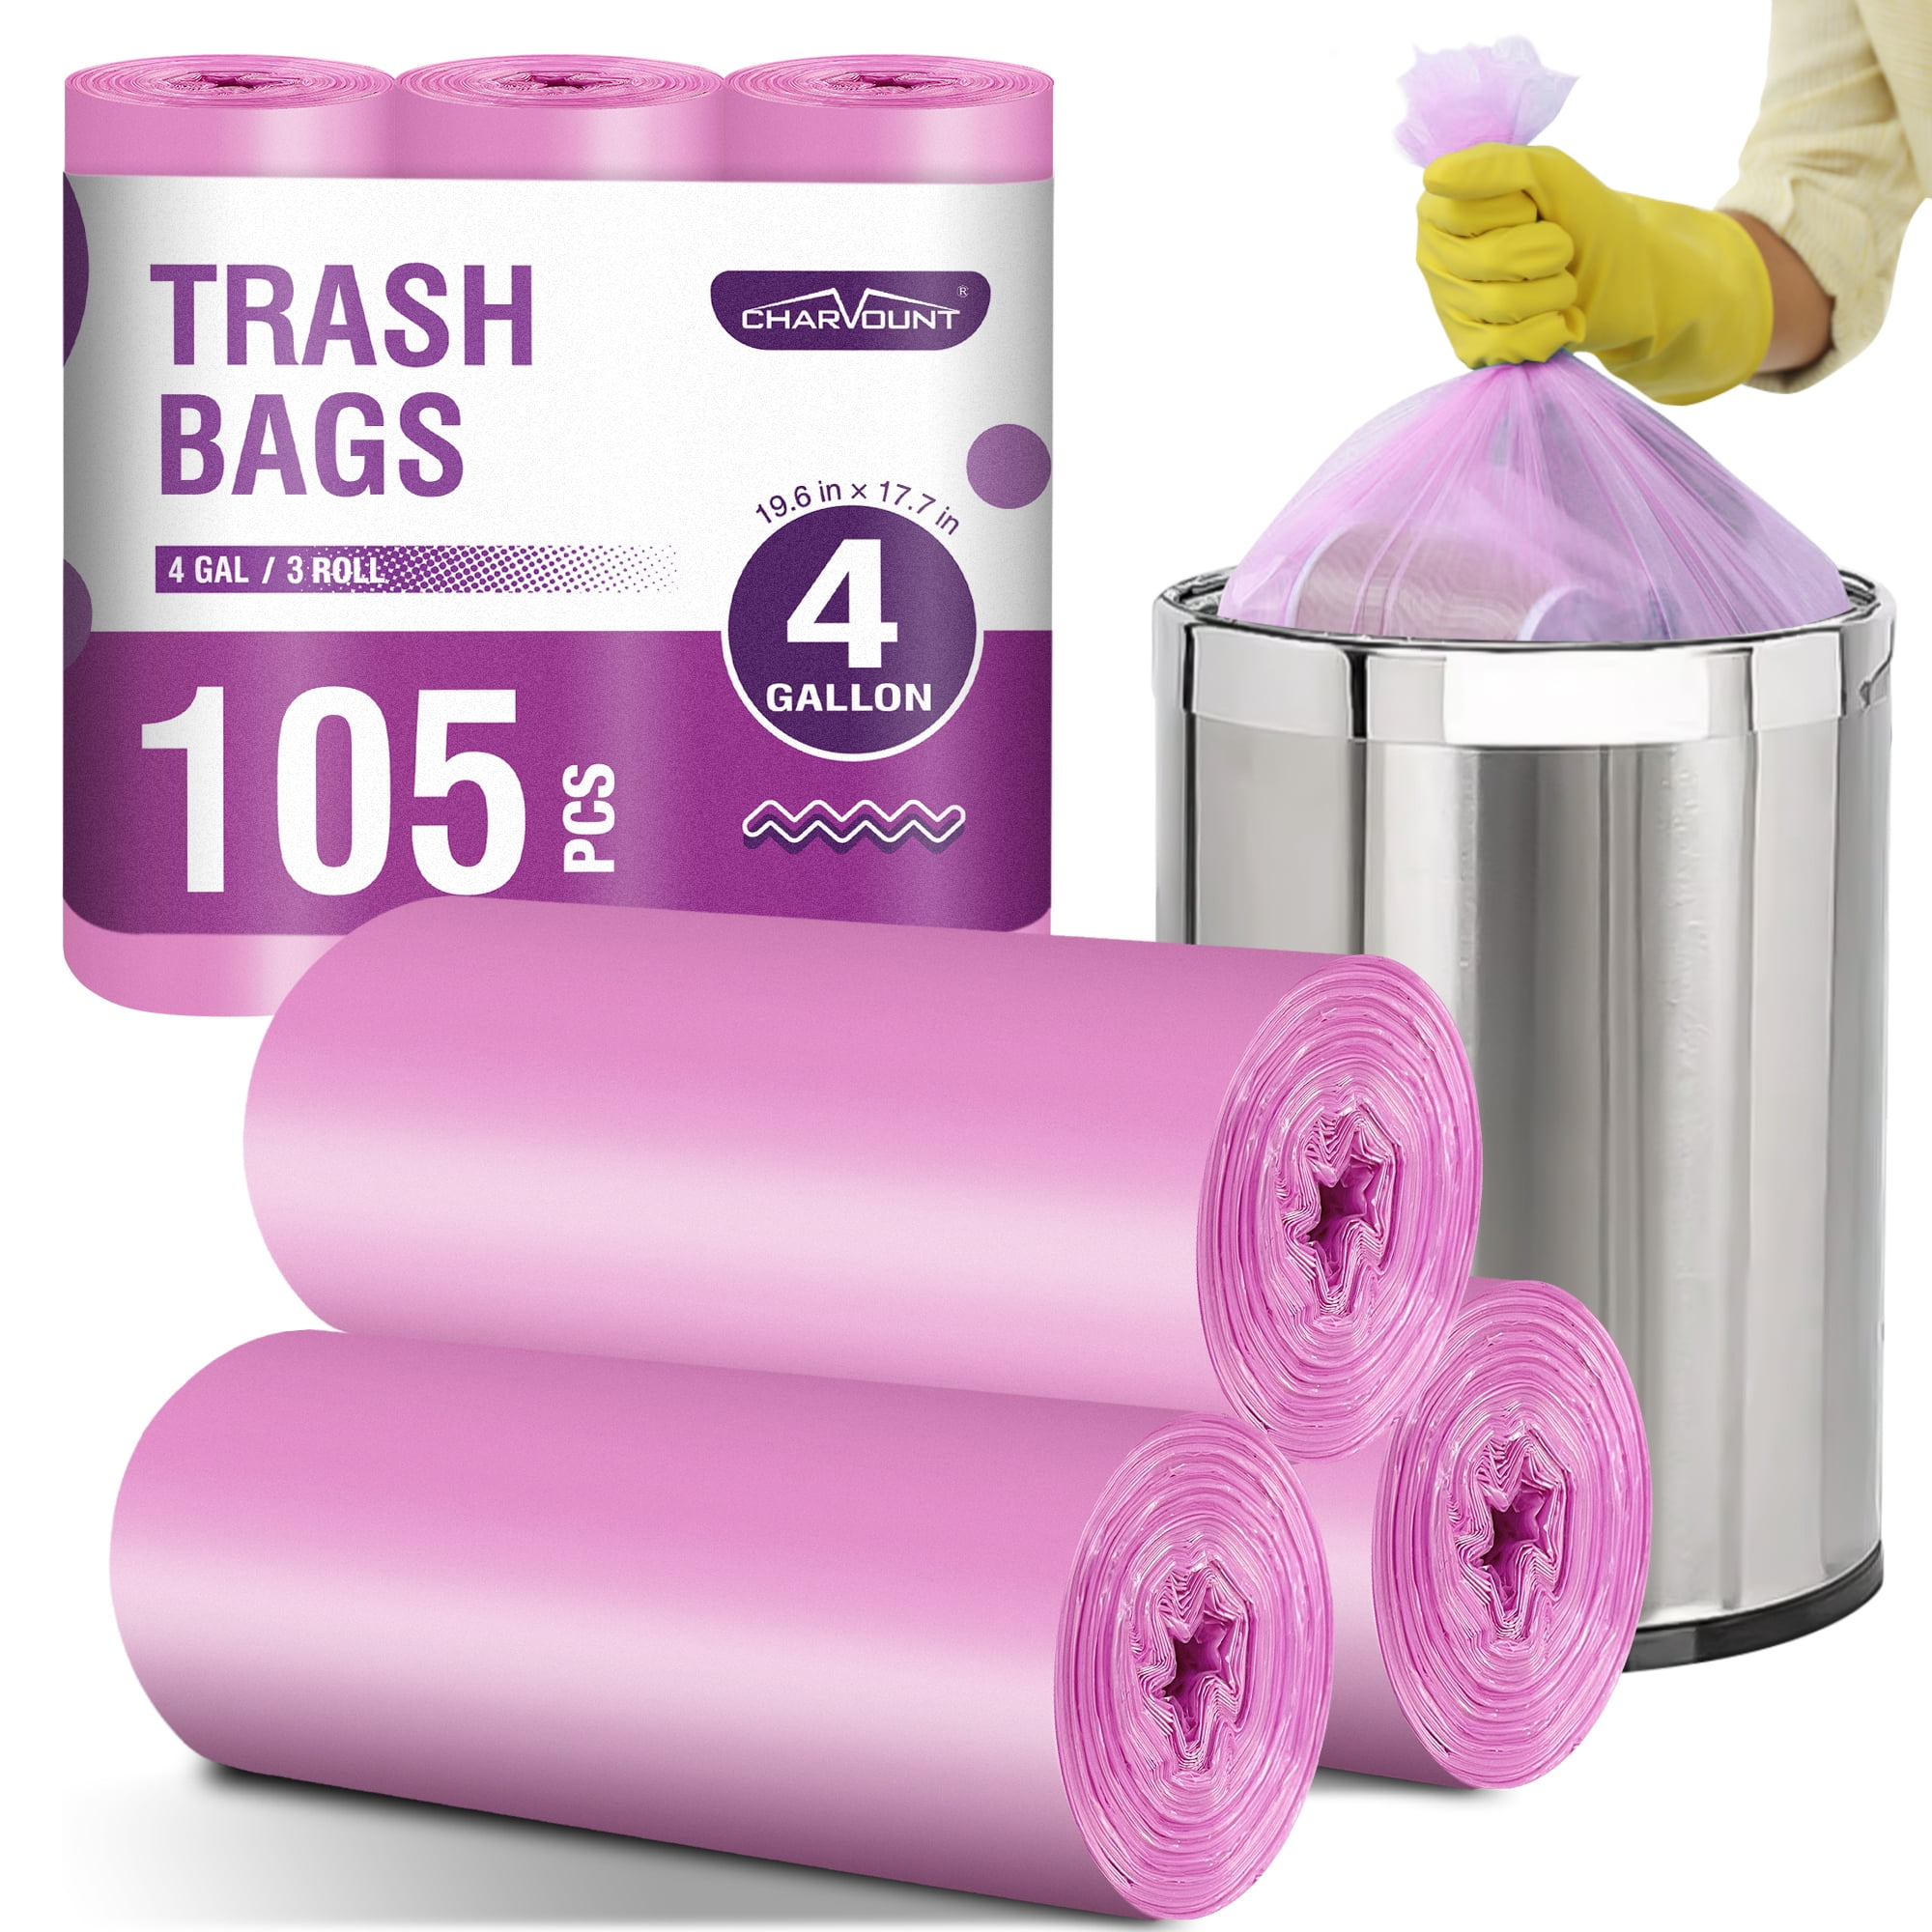 Grocery Bag Trash Bin - IPPINKA